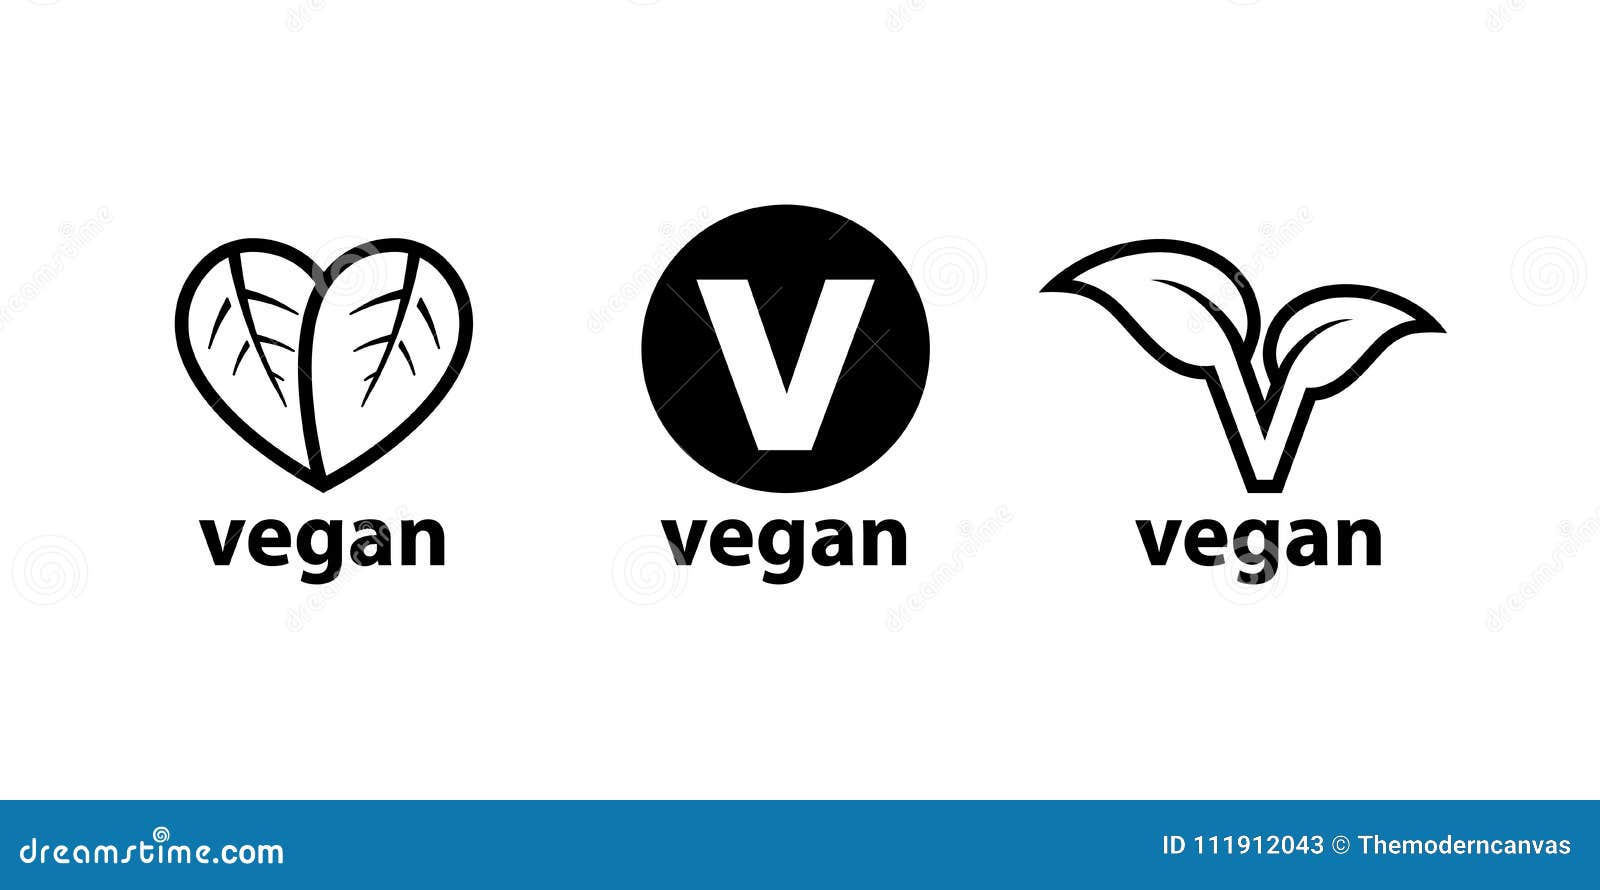 Vegan Food Label Icons Symbols Stock Vector Illustration Of Icon